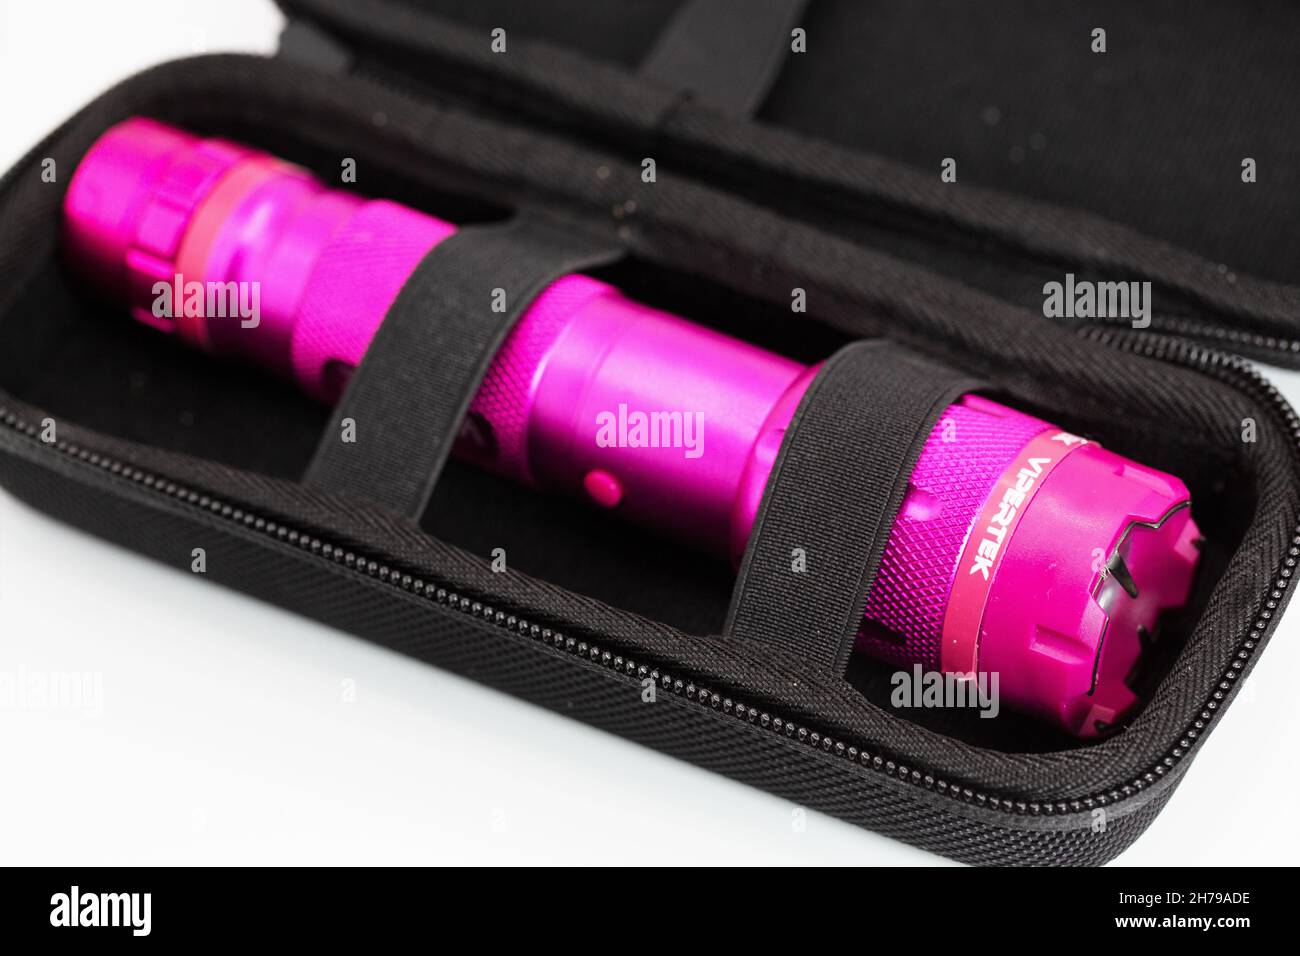 Close up of a pink Vipertek stun gun in a black carrying case. Stock Photo